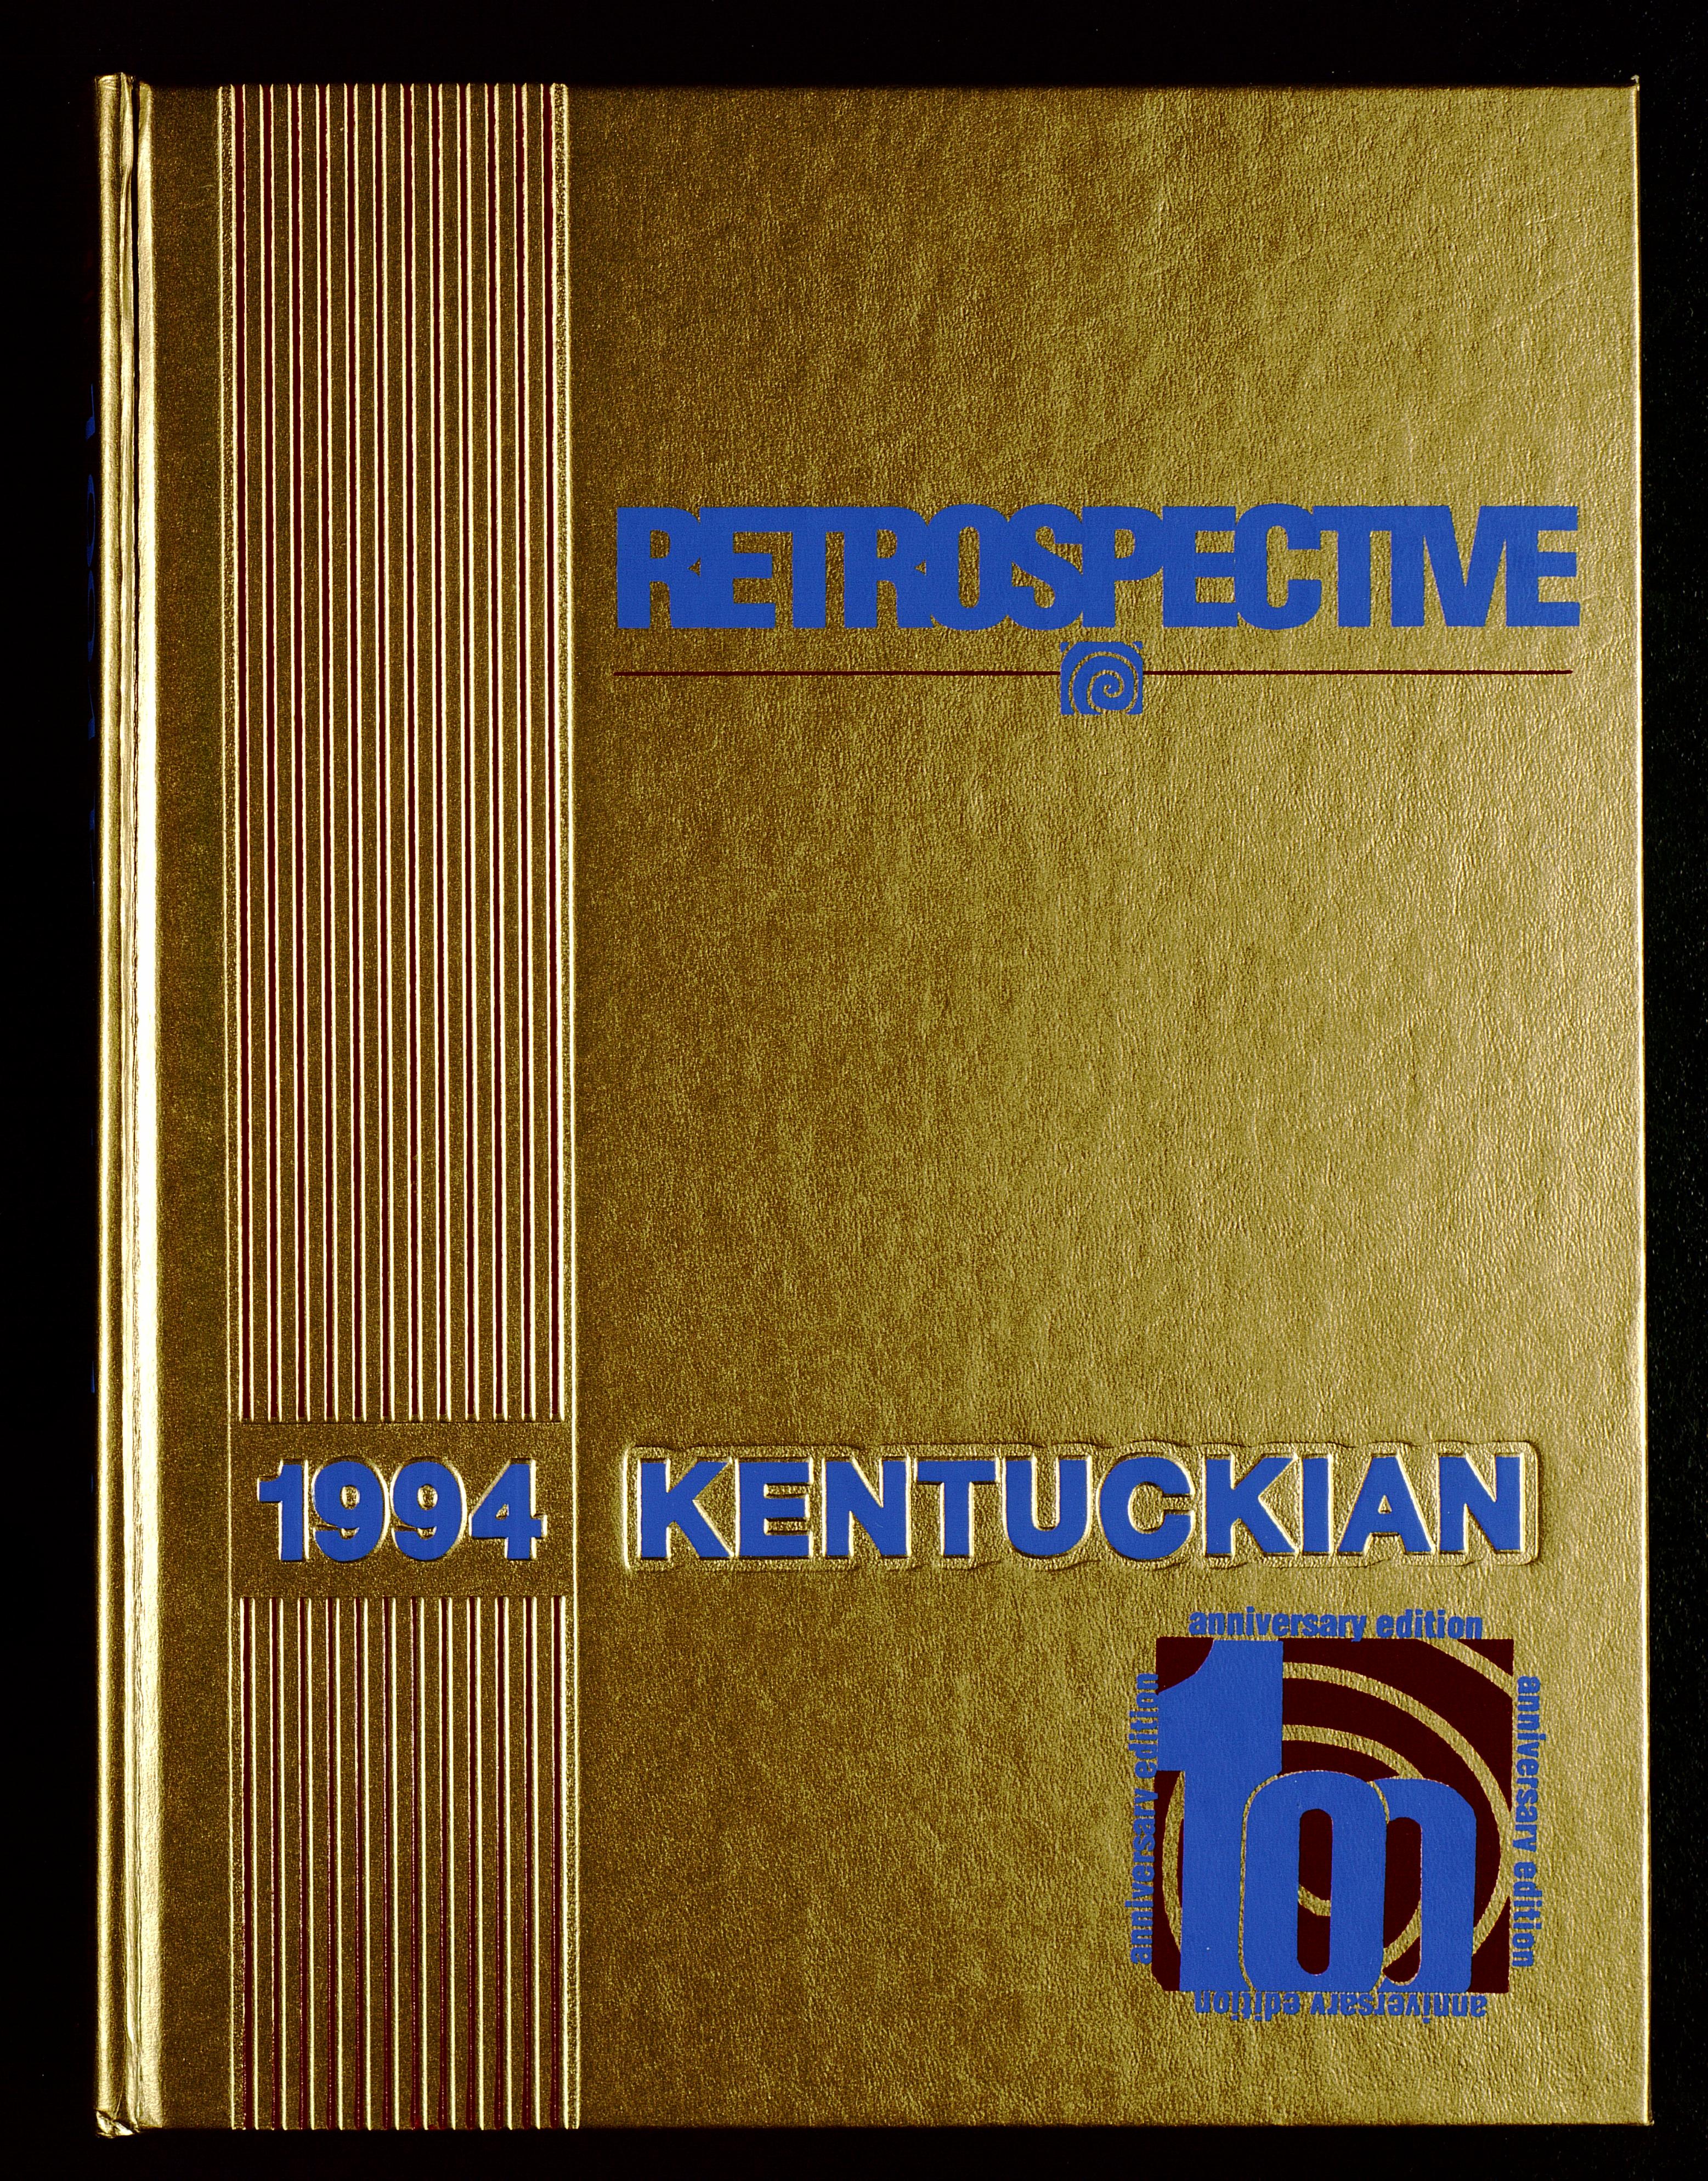 1994 Kentuckian, Vol. 100